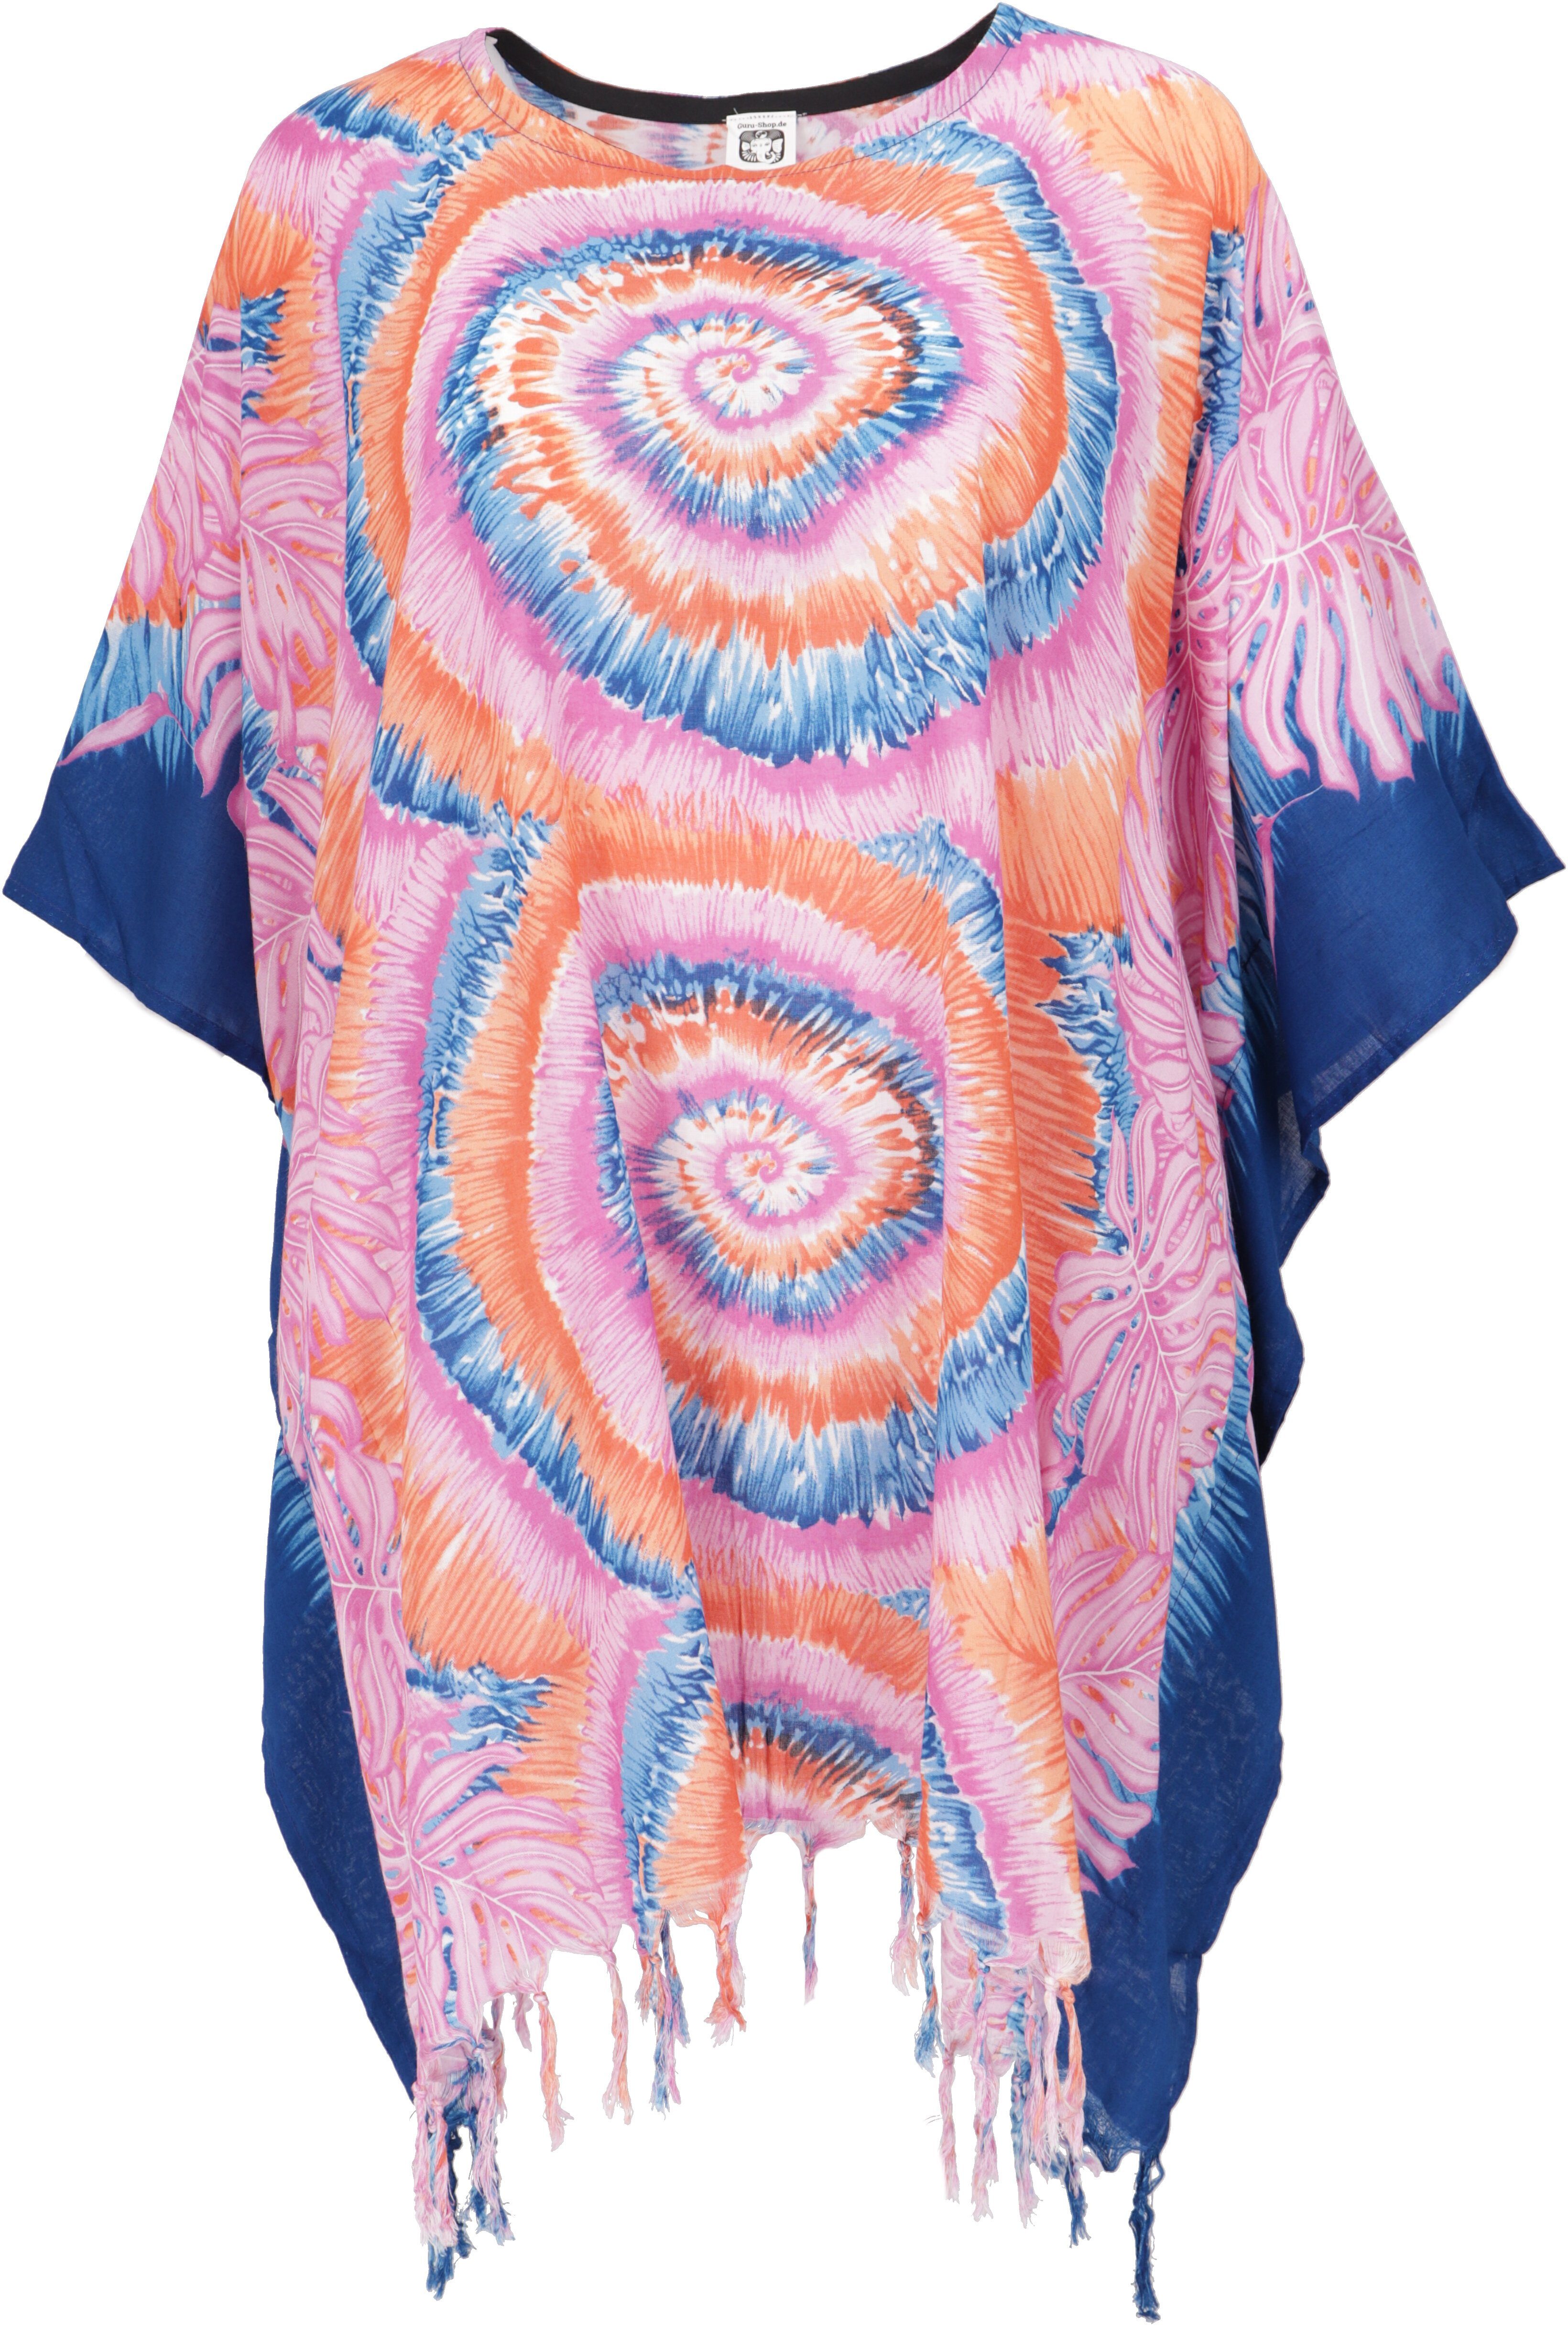 Guru-Shop Longbluse Poncho, alternative Bekleidung Kaftan, Damen.. pink/blau Minikleid, Tunika